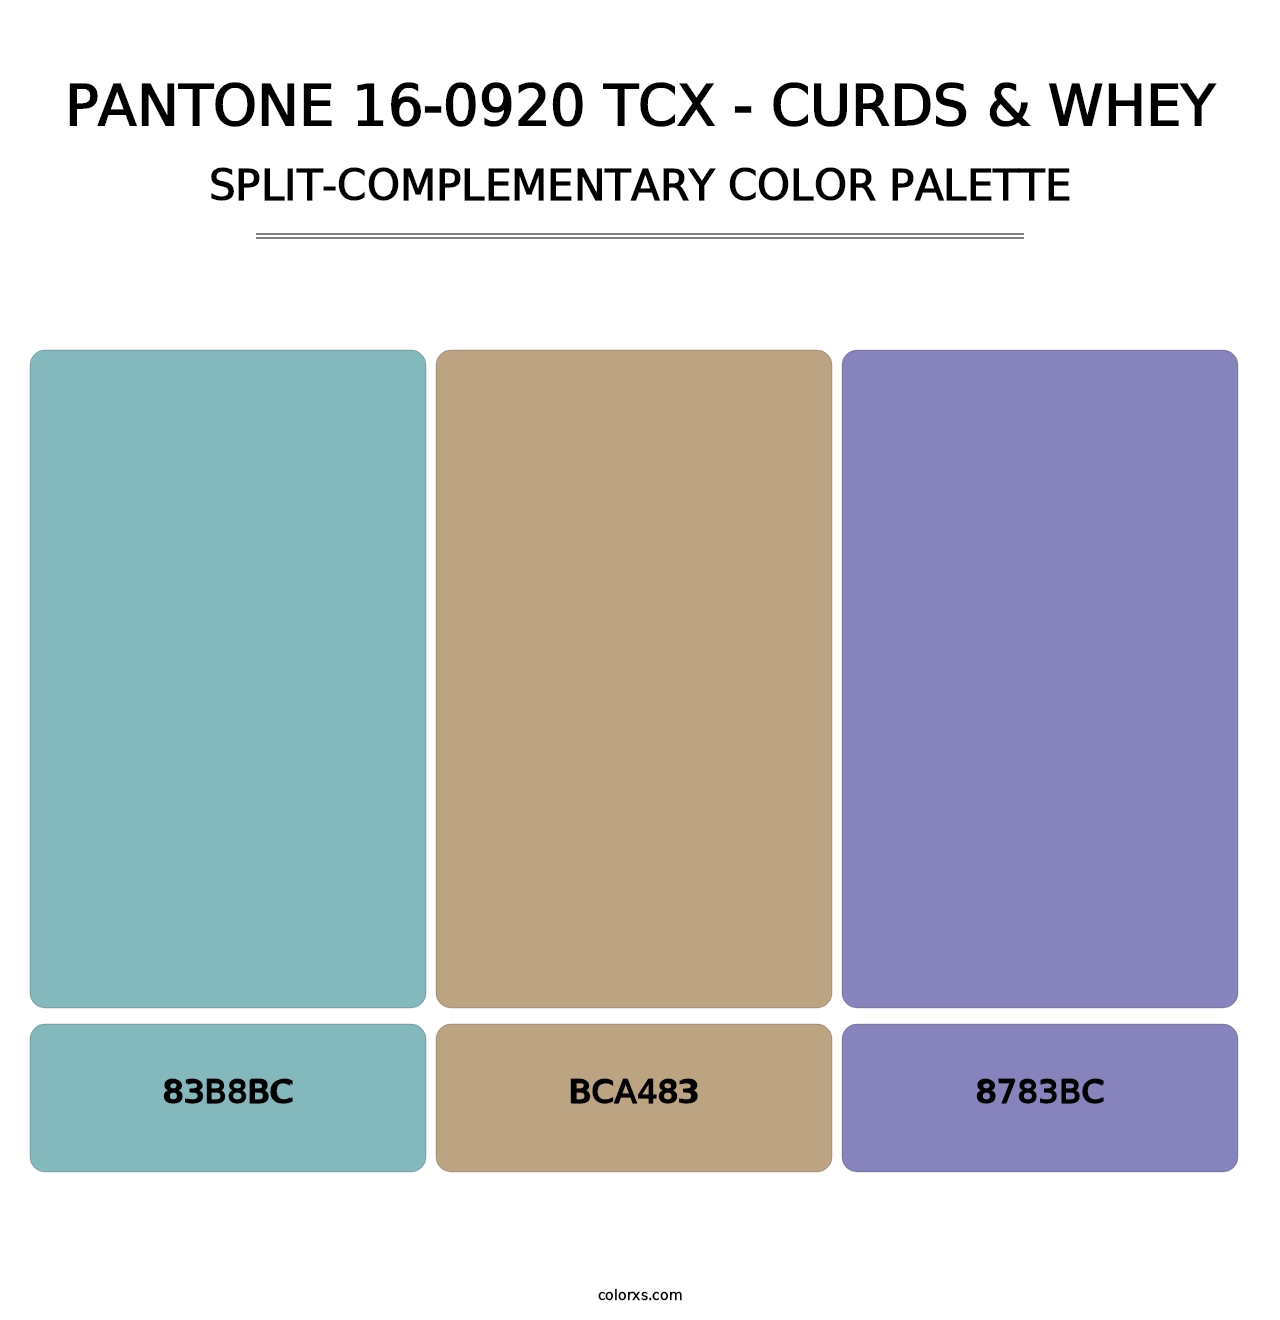 PANTONE 16-0920 TCX - Curds & Whey - Split-Complementary Color Palette